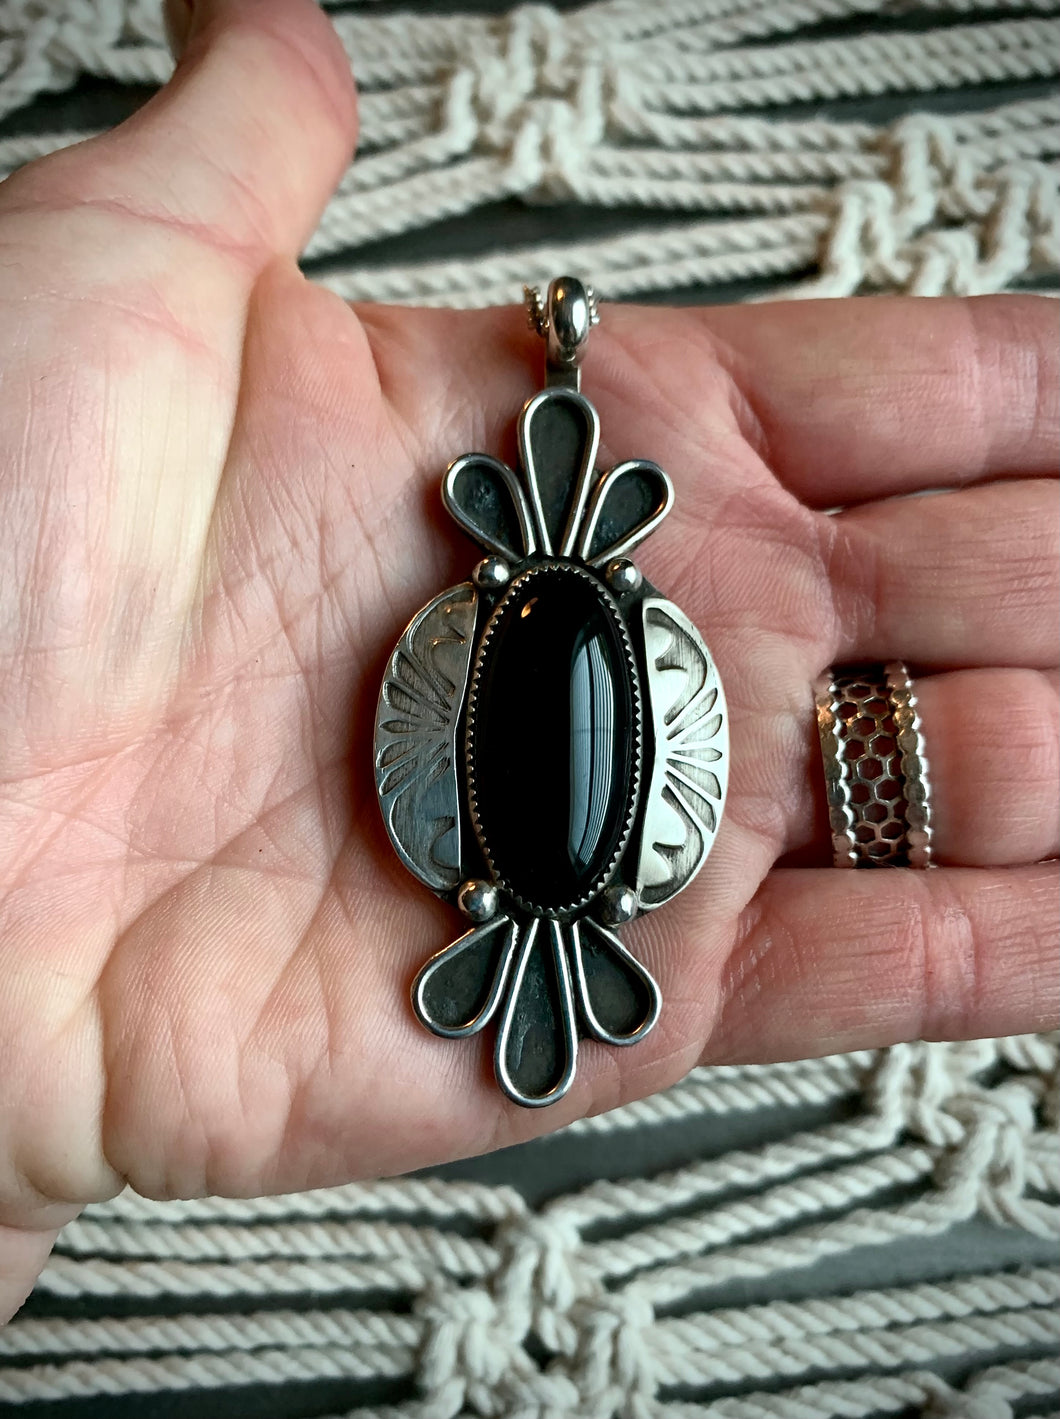 Black onyx fanned pendant necklace